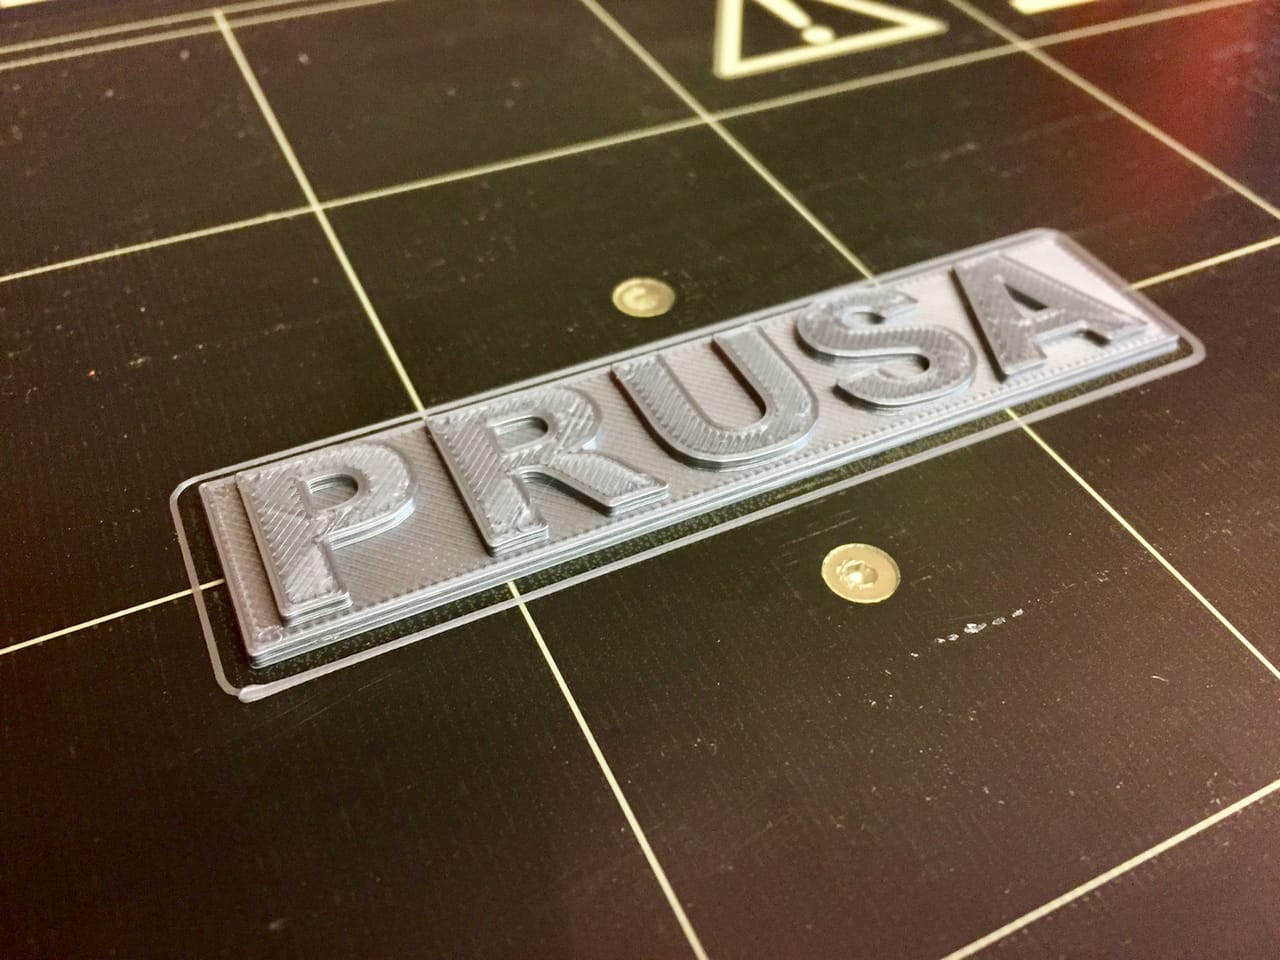  Our first print on the Original Pruse i3 desktop 3D printer 